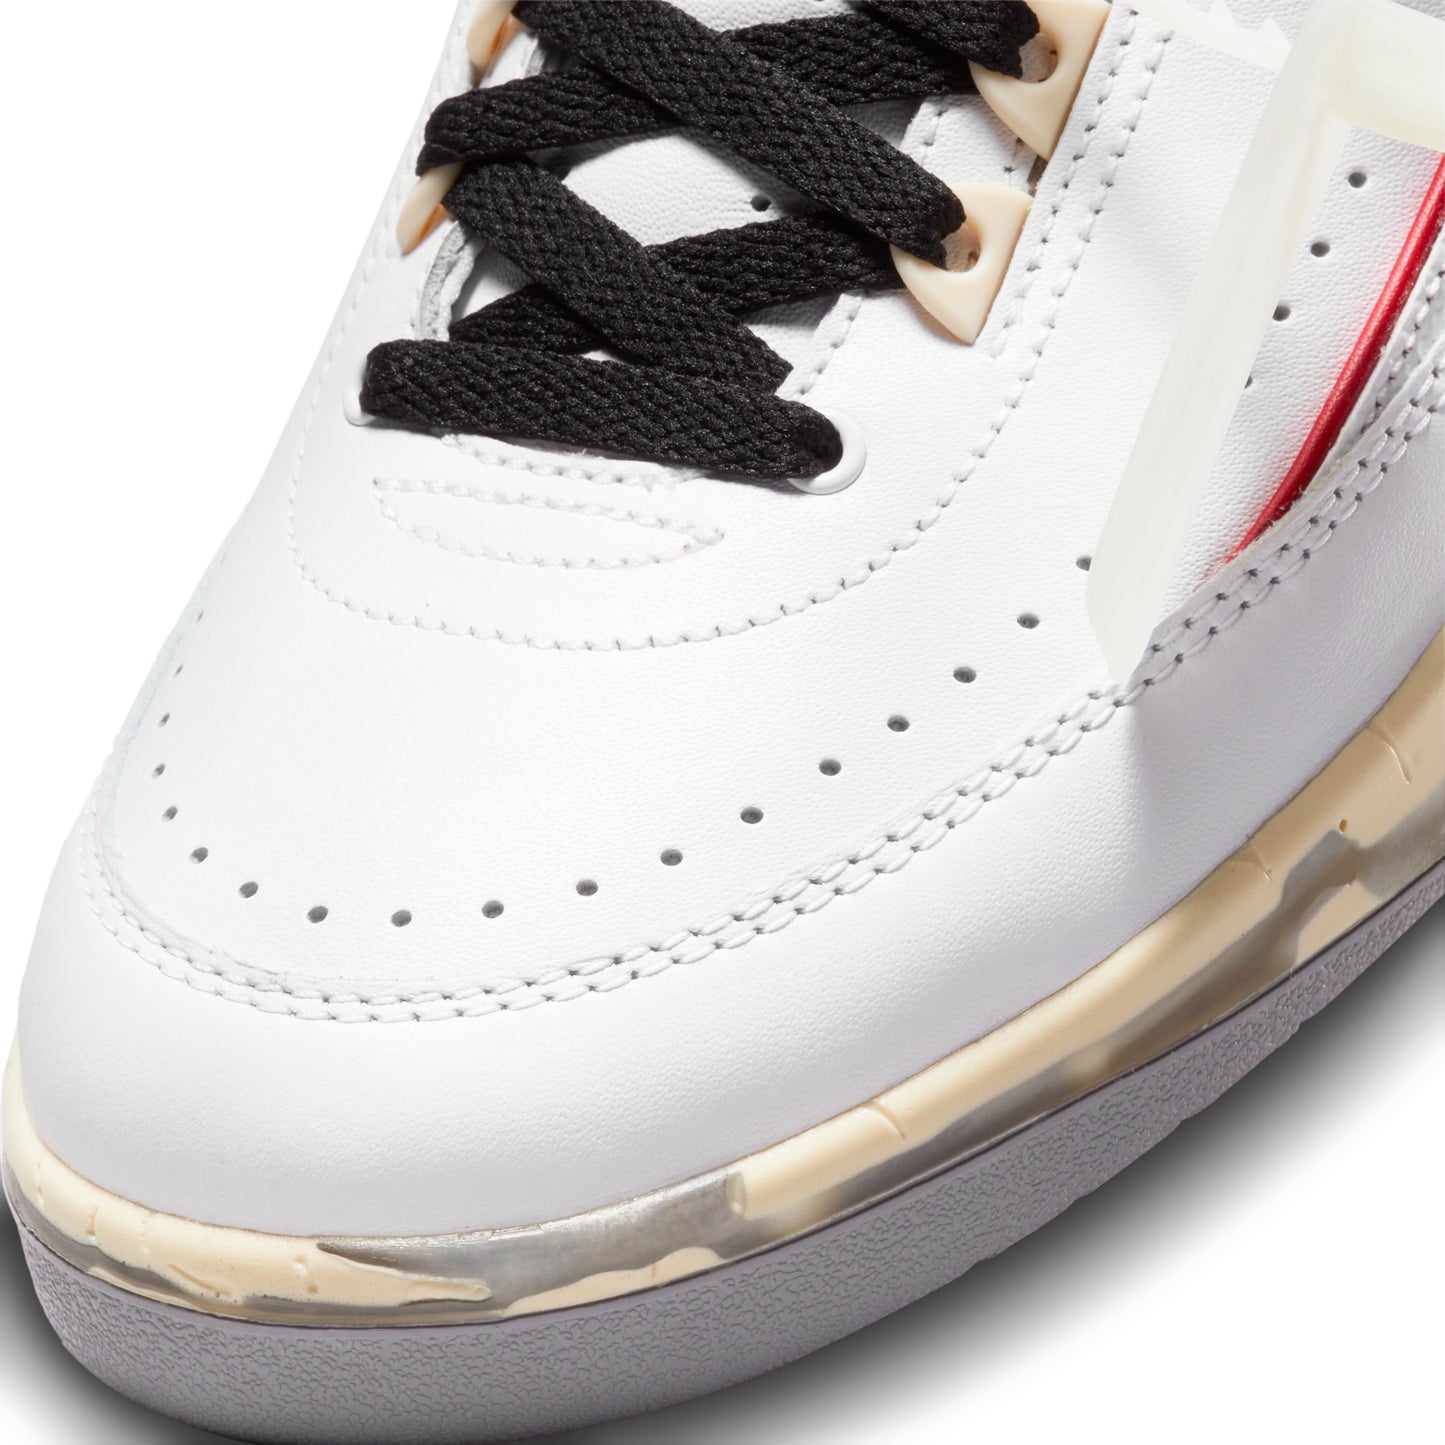 Nike Air Jordan x Off-White 2 Retro Low SP White Red